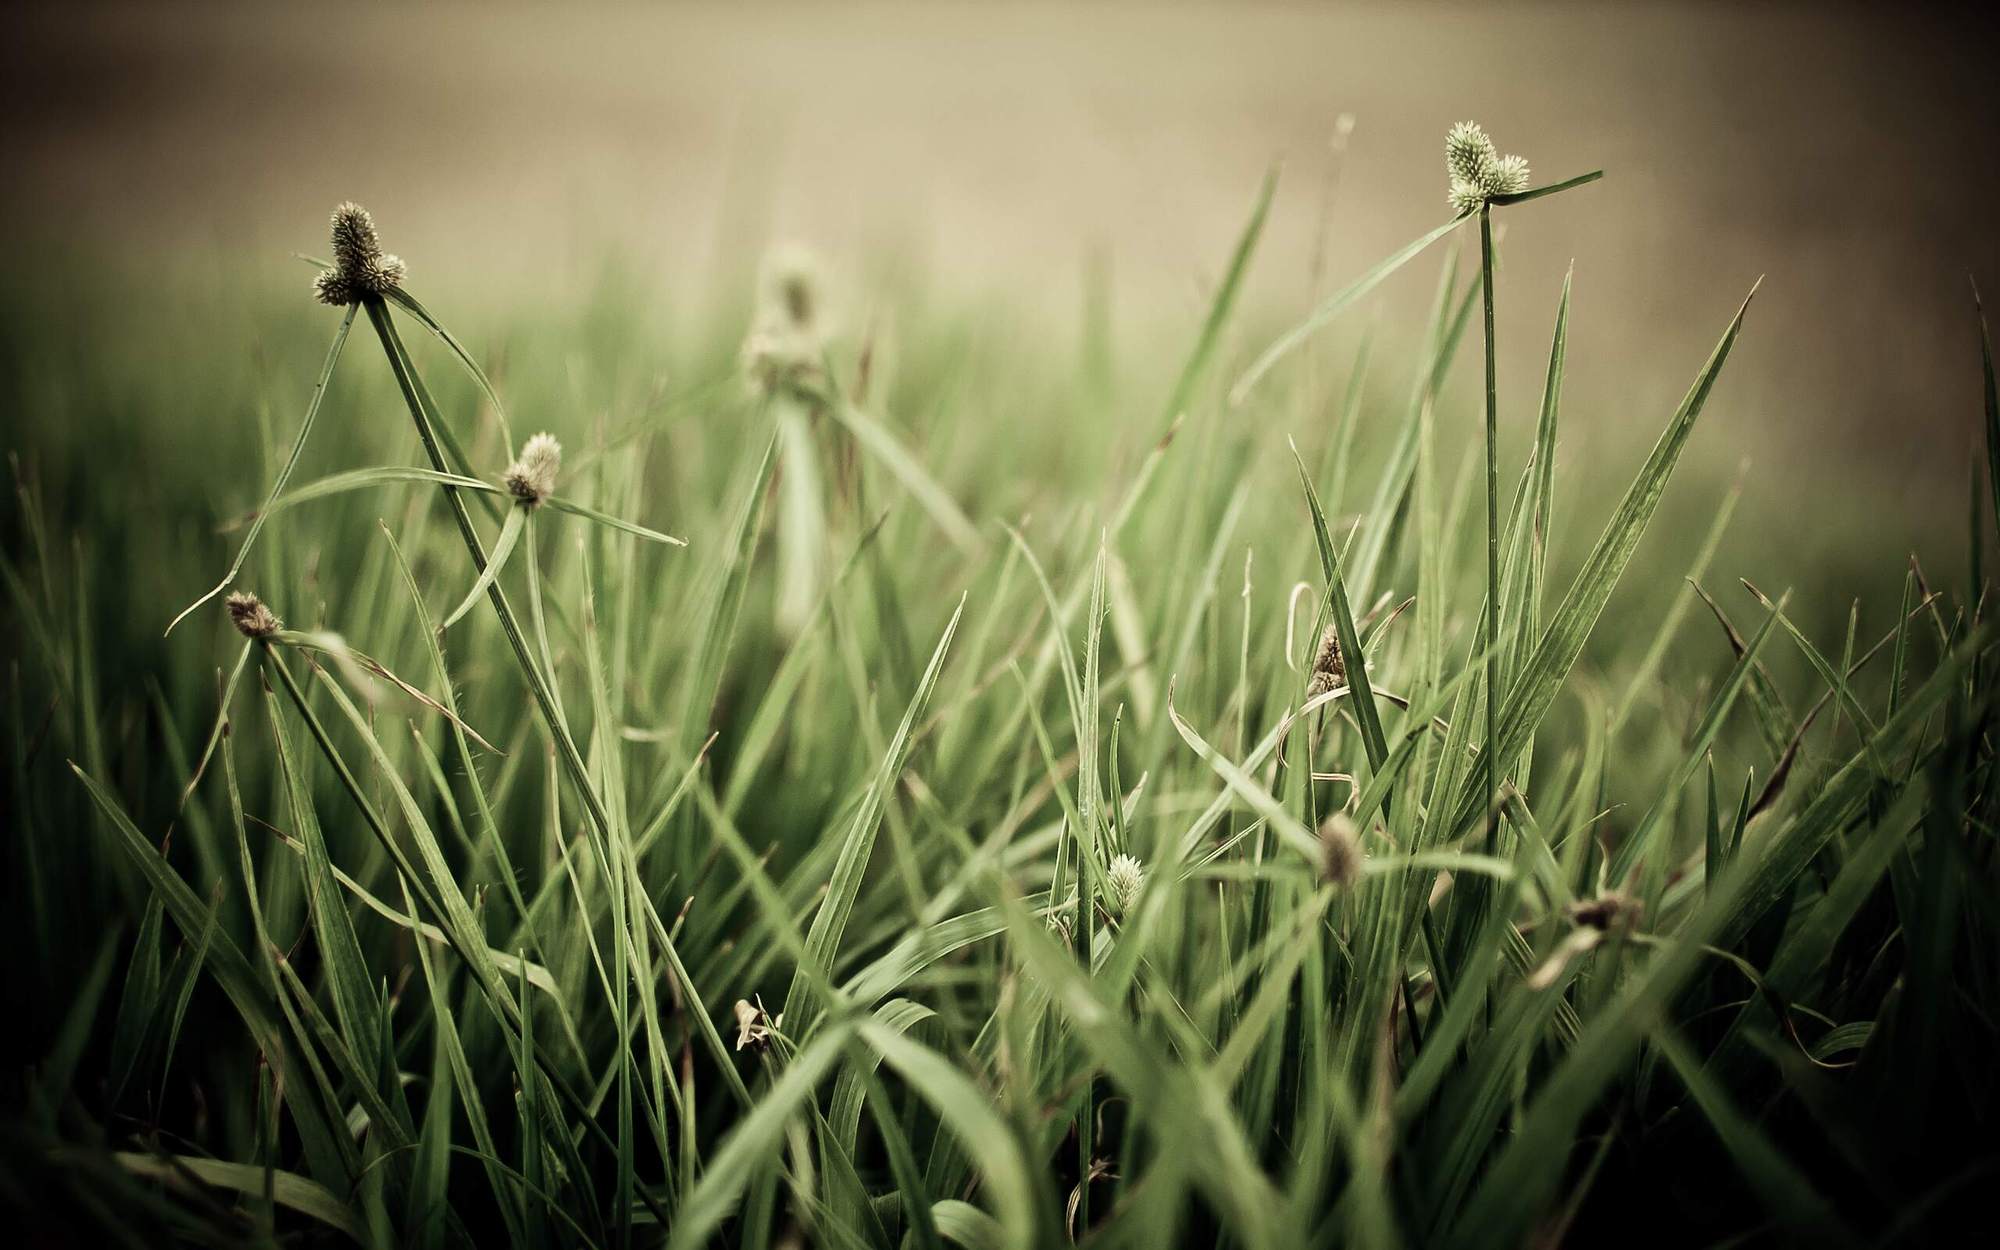 The_Grass_aint_Greener_by_fix_pena.jpg